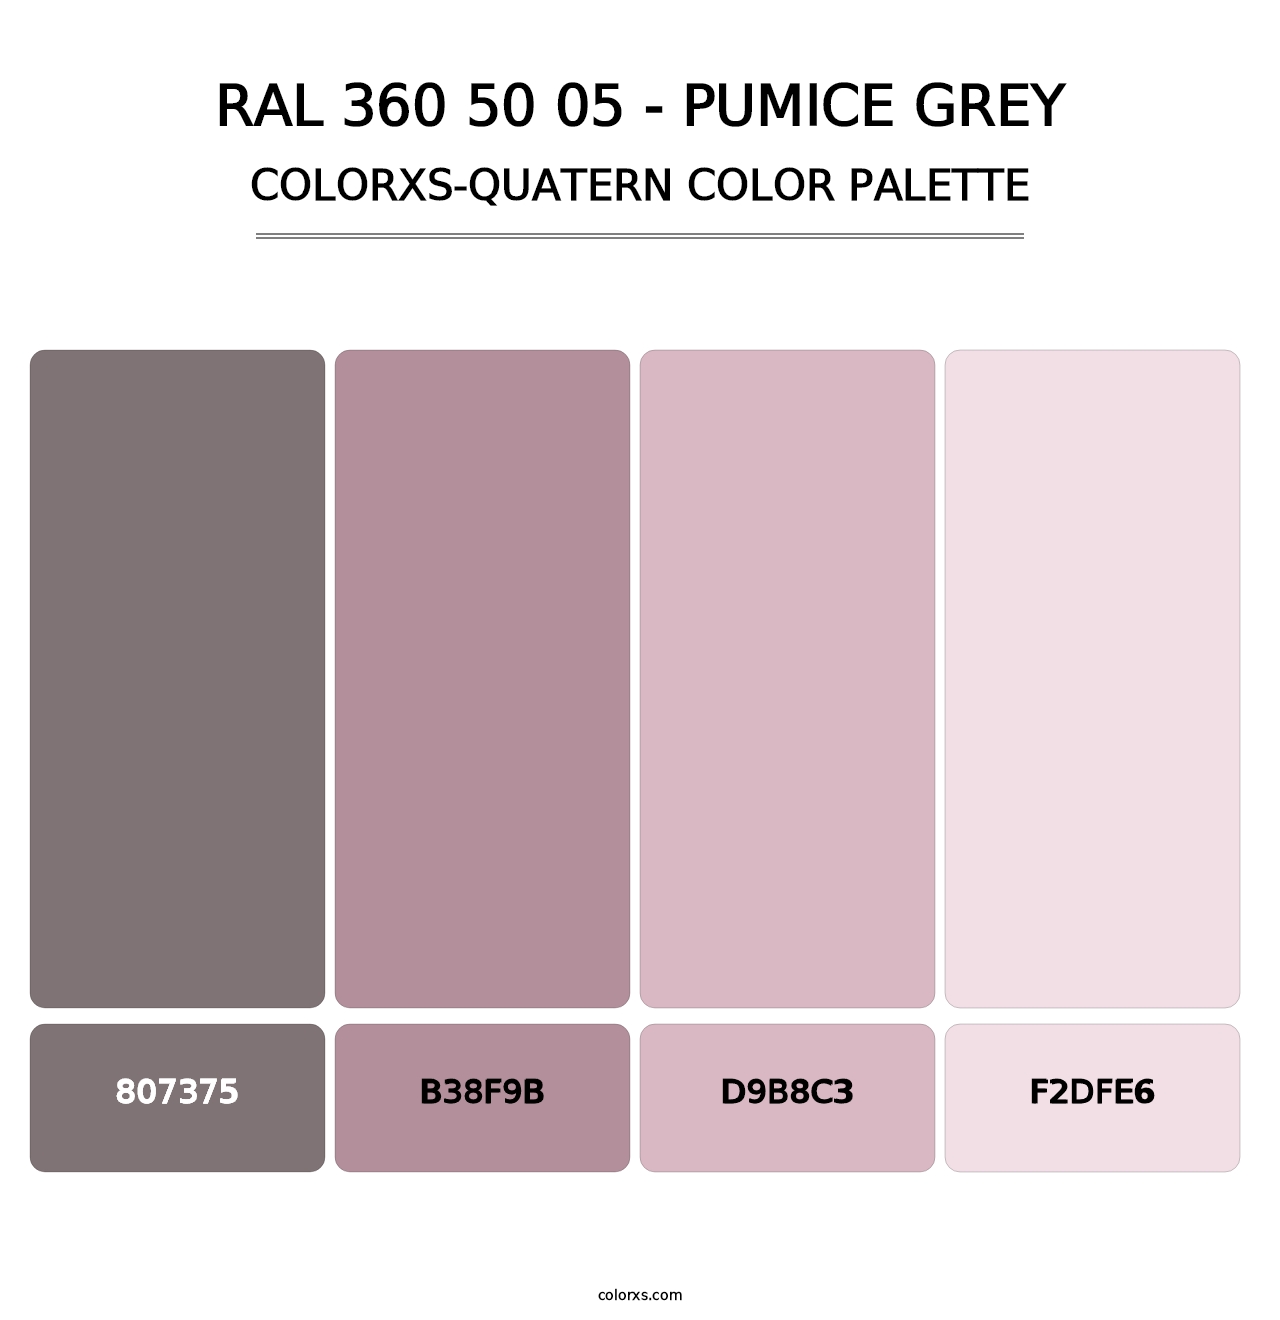 RAL 360 50 05 - Pumice Grey - Colorxs Quatern Palette